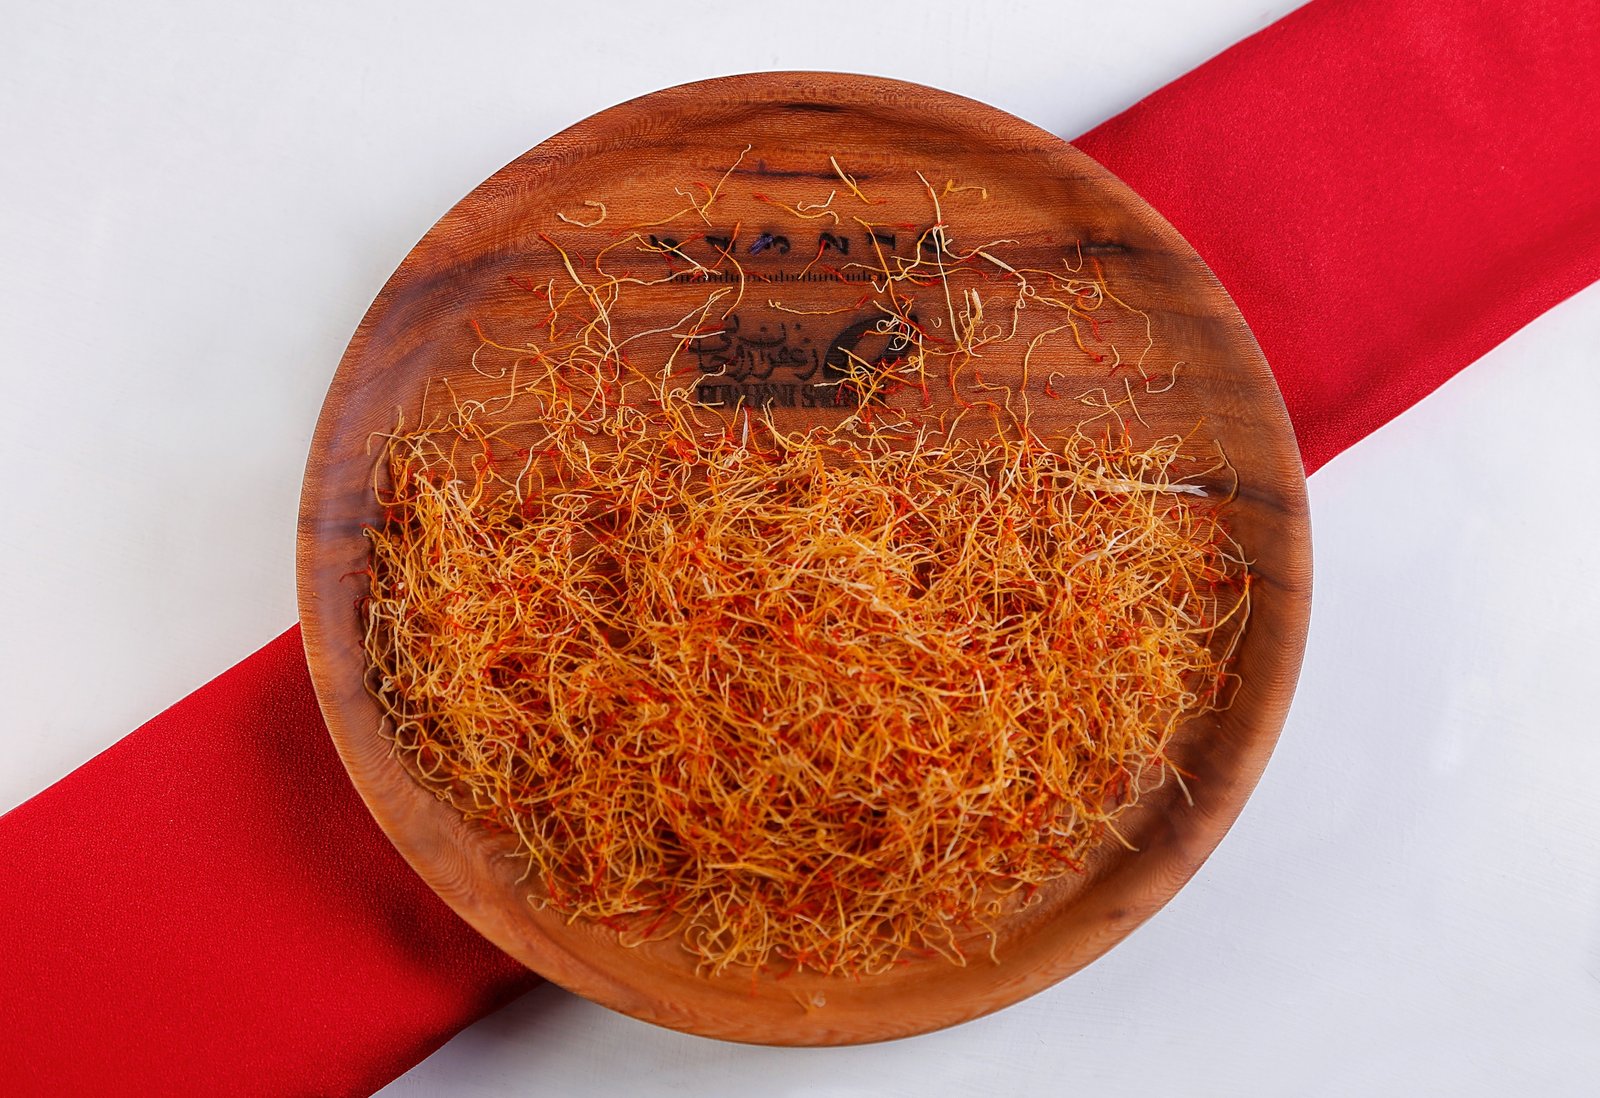 Style Of Saffron - Iranian Saffron supplier and exporter